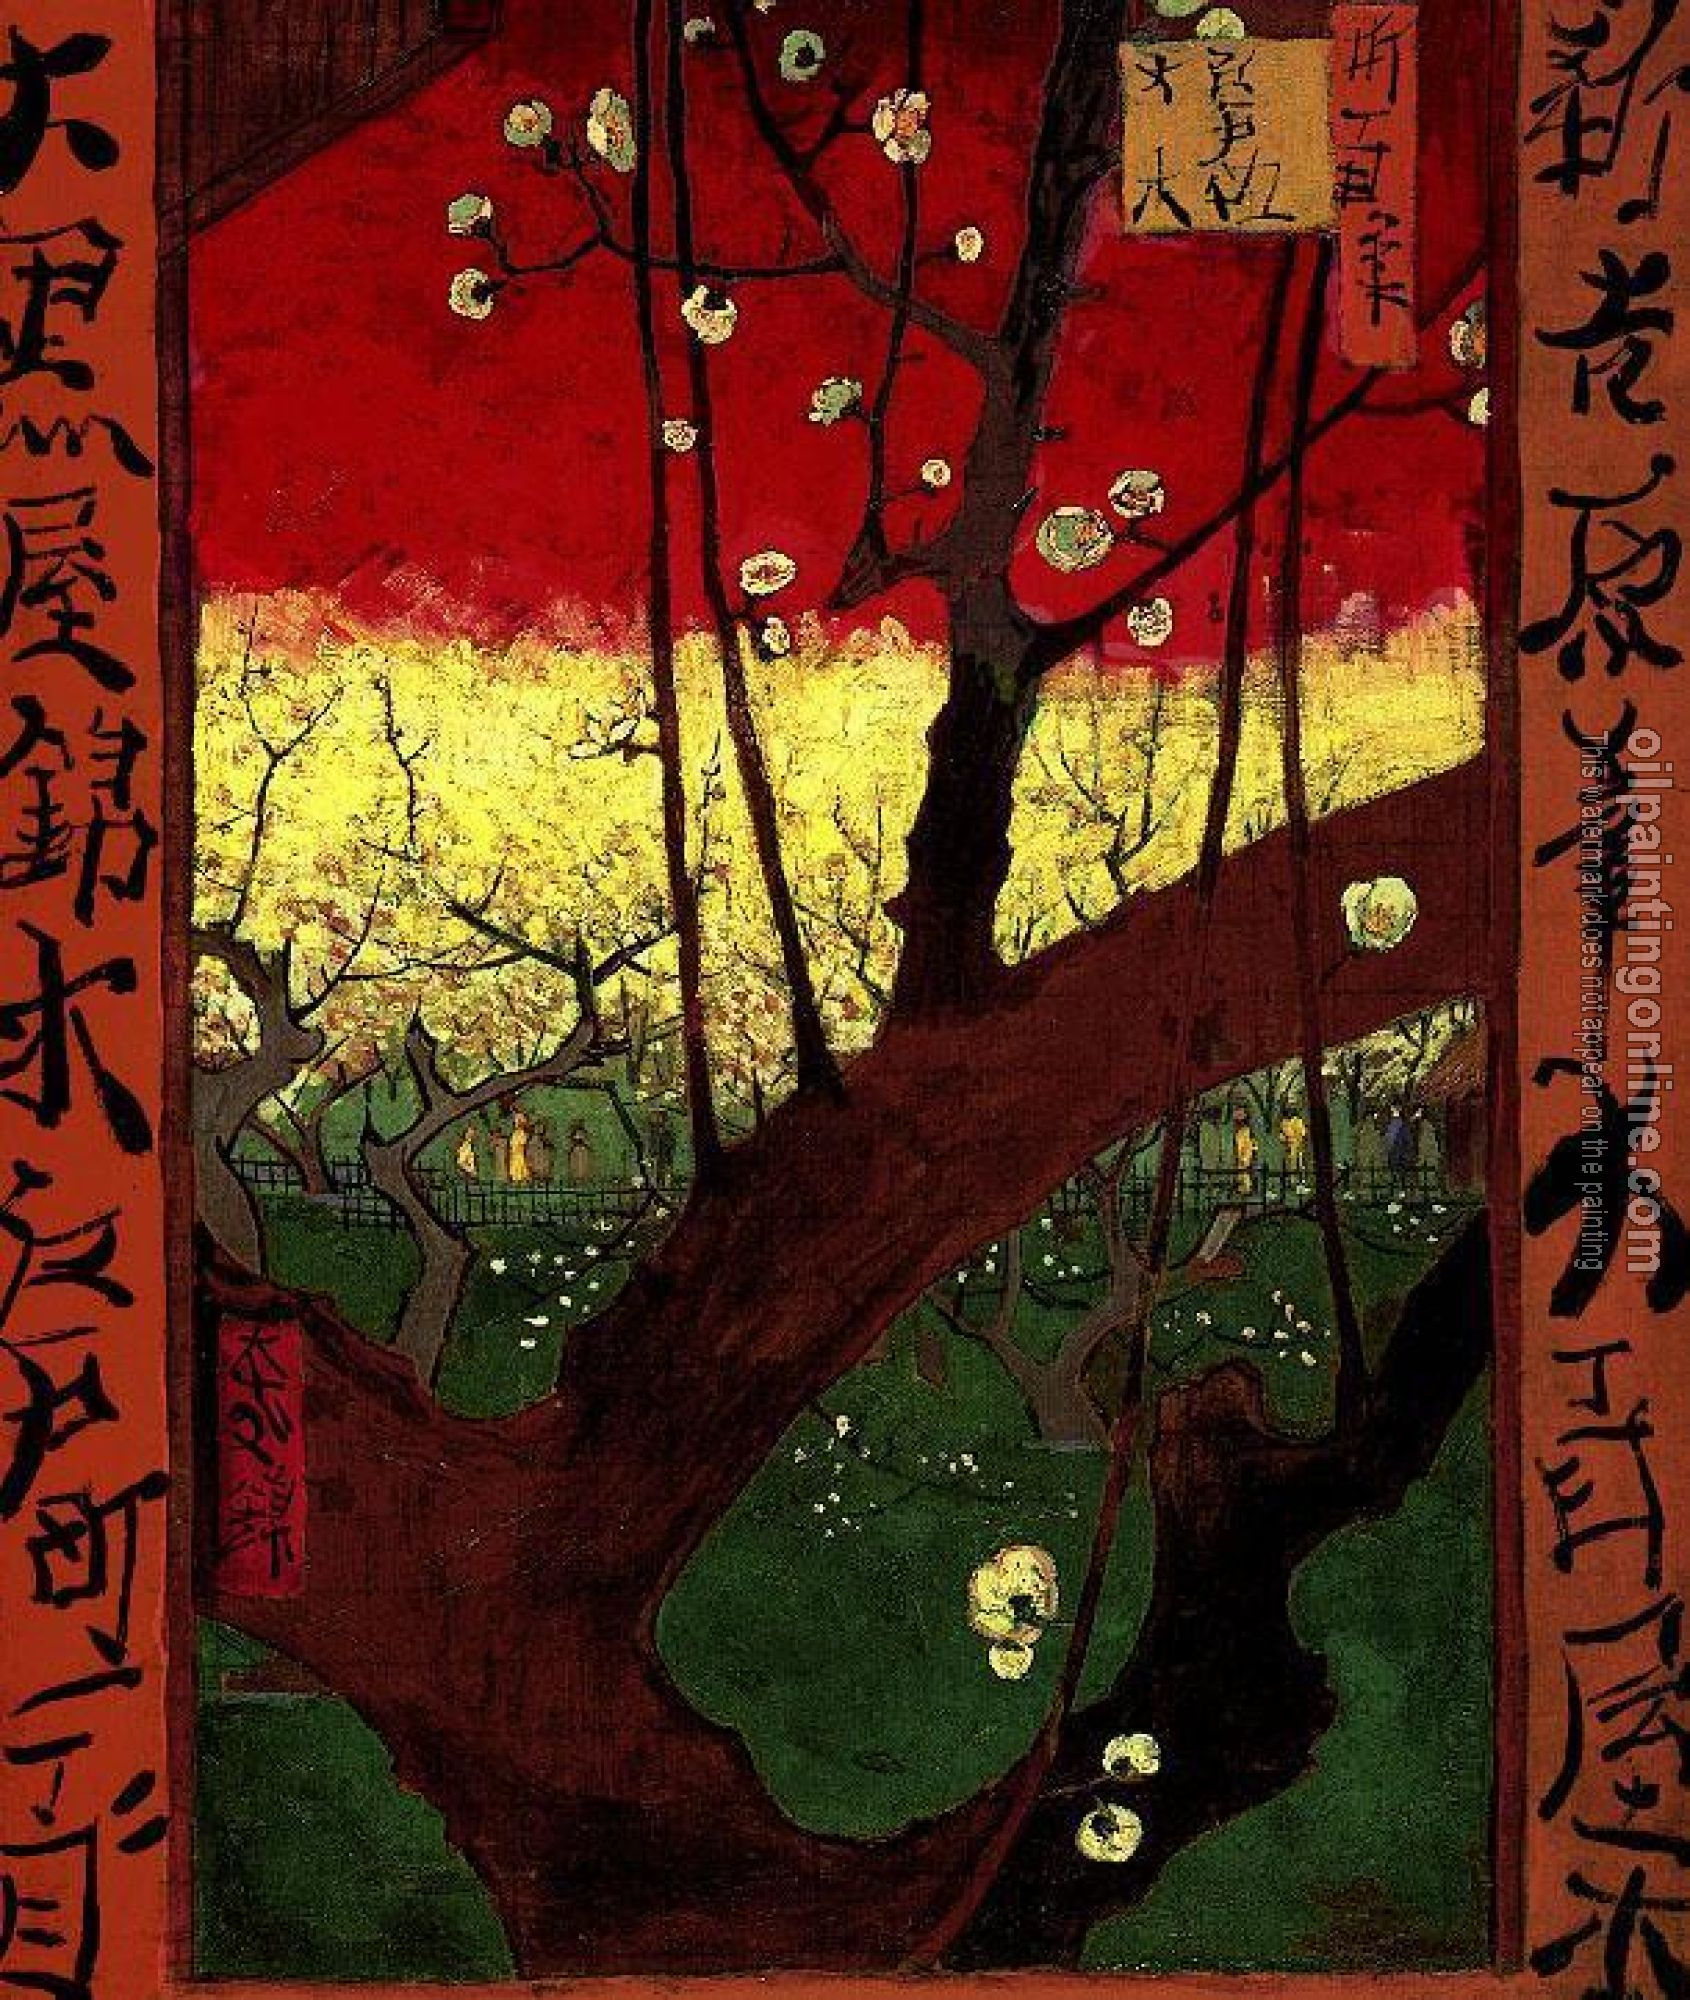 Gogh, Vincent van - Japonaiserie, Flowering Plum Tree